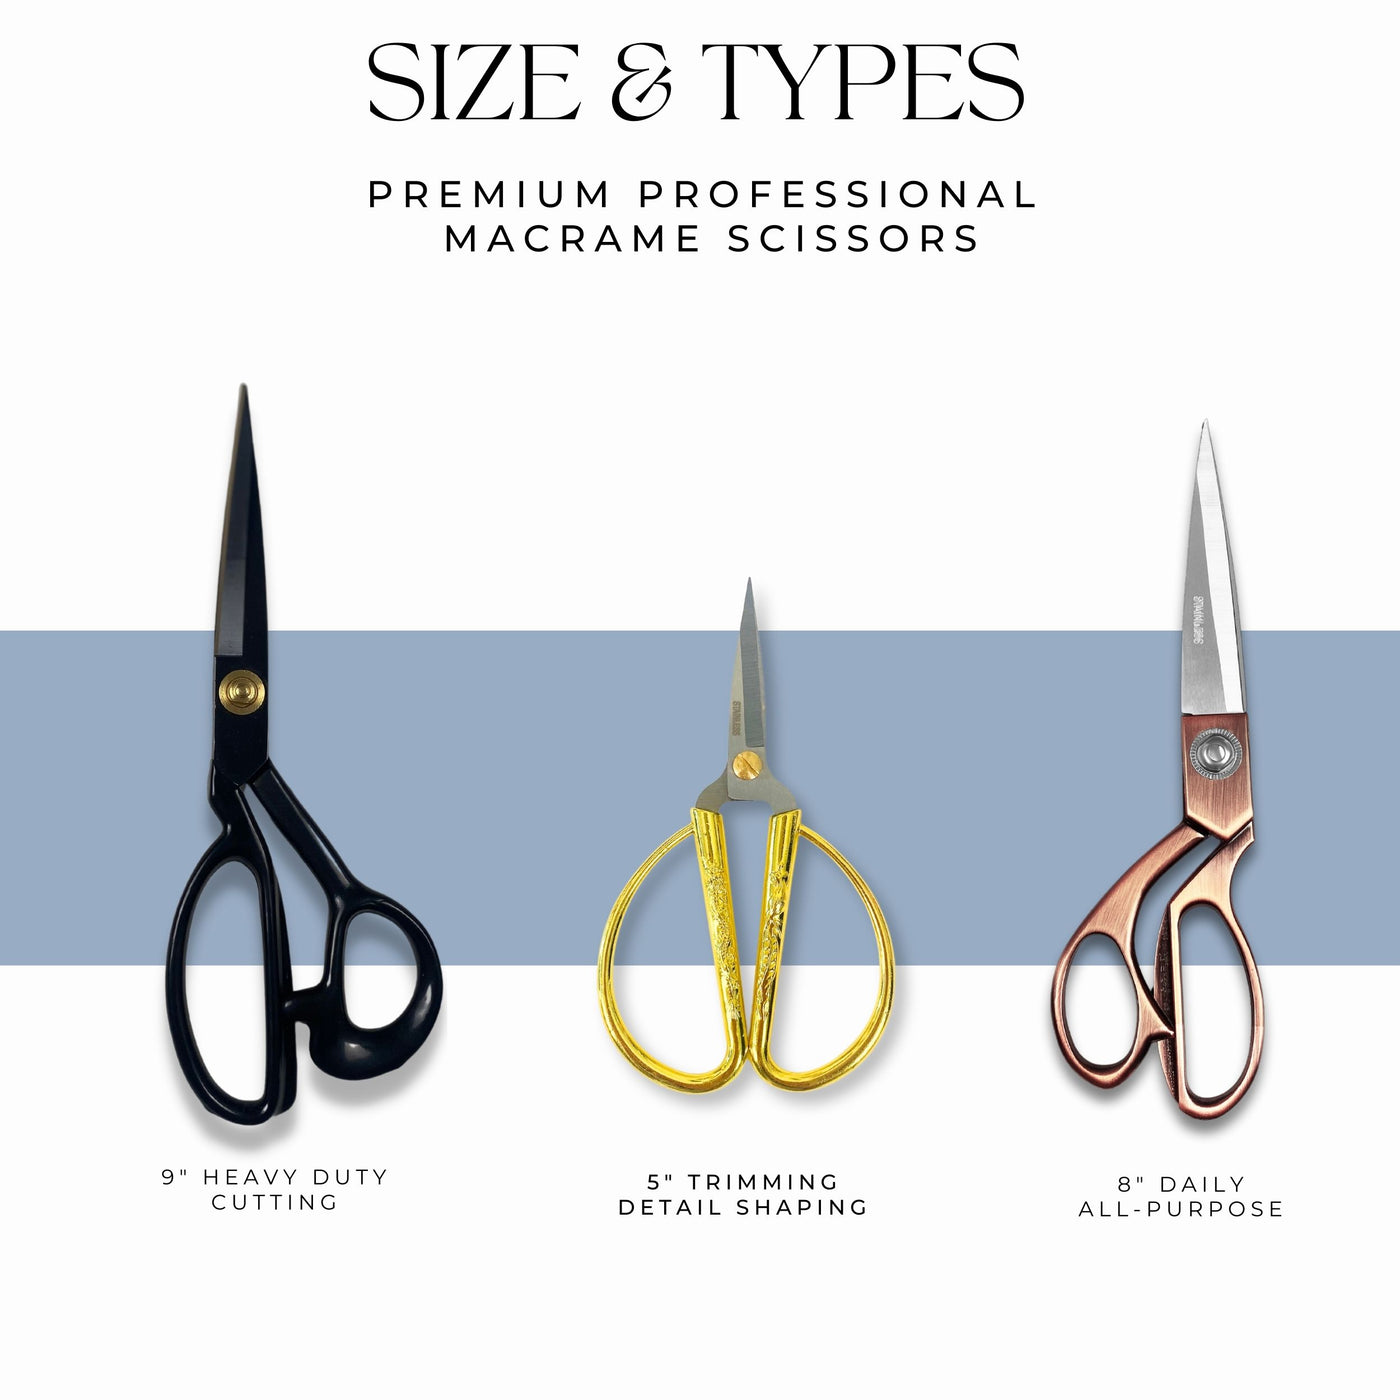 5" Gold Precision Macrame Scissors (Detailing, Trimming, & Shaping)